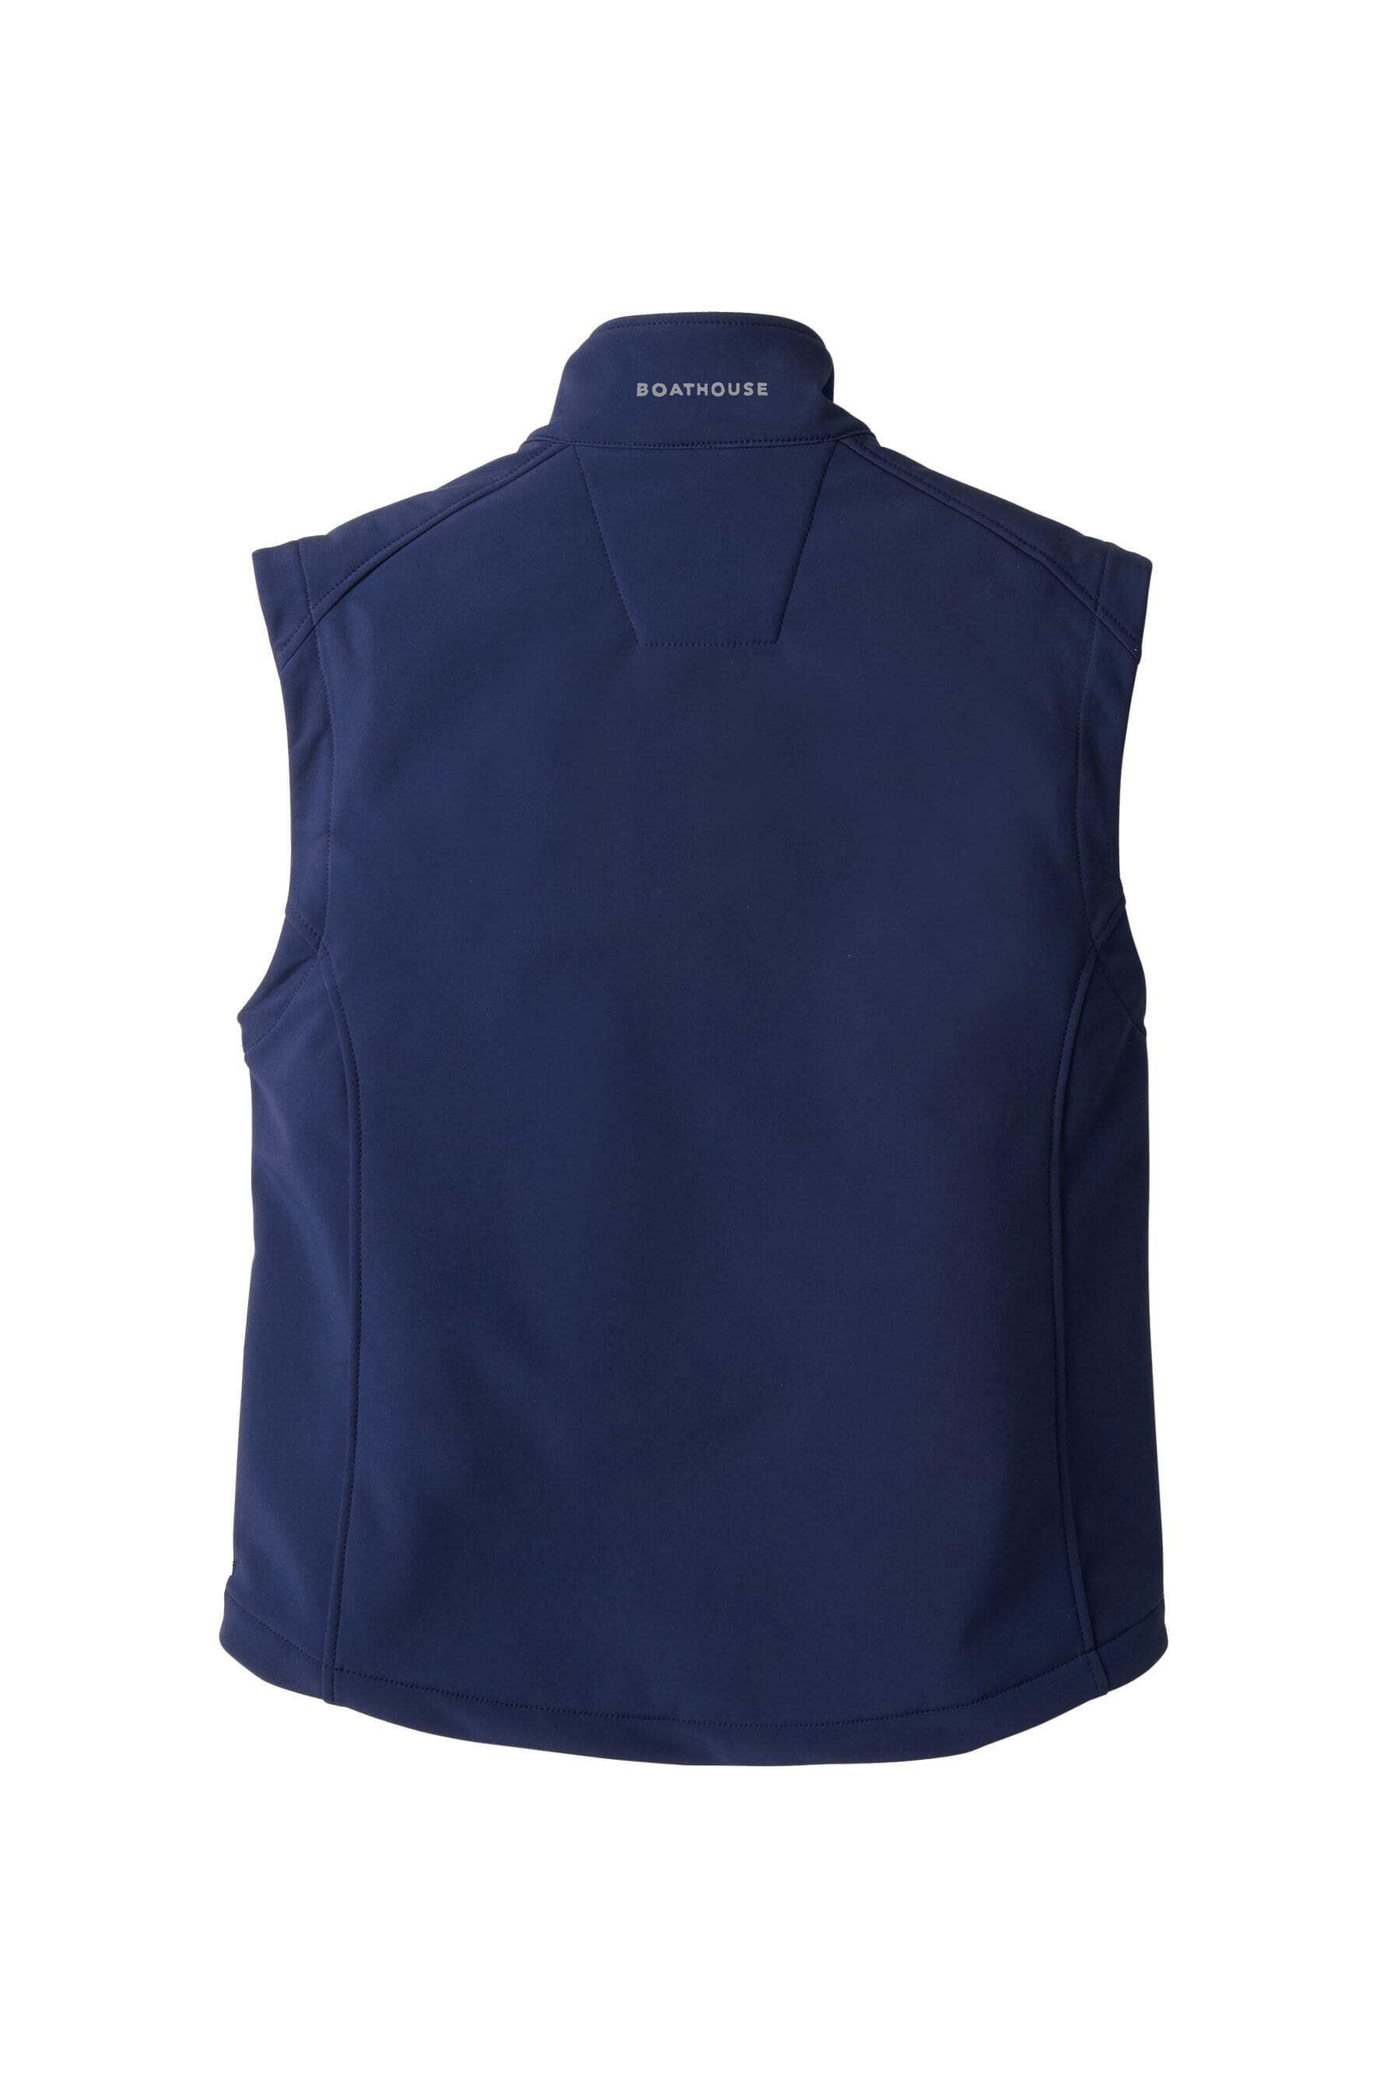 BOATHOUSE Men's Equinox Soft Shell Vest